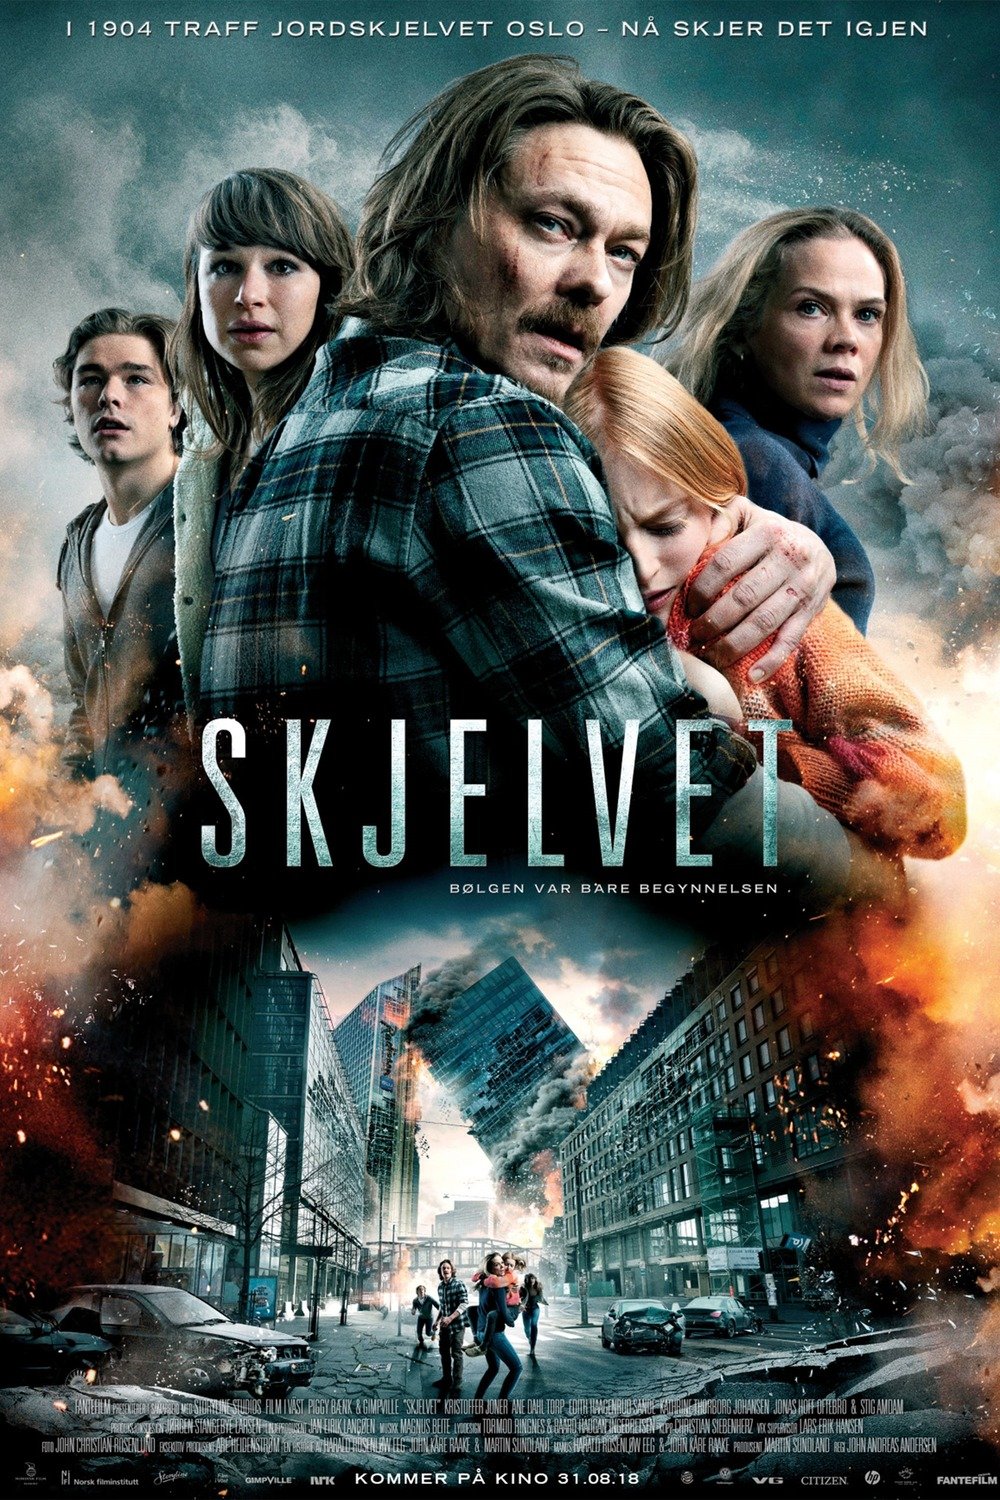 L'affiche originale du film Skjelvet en norvégien